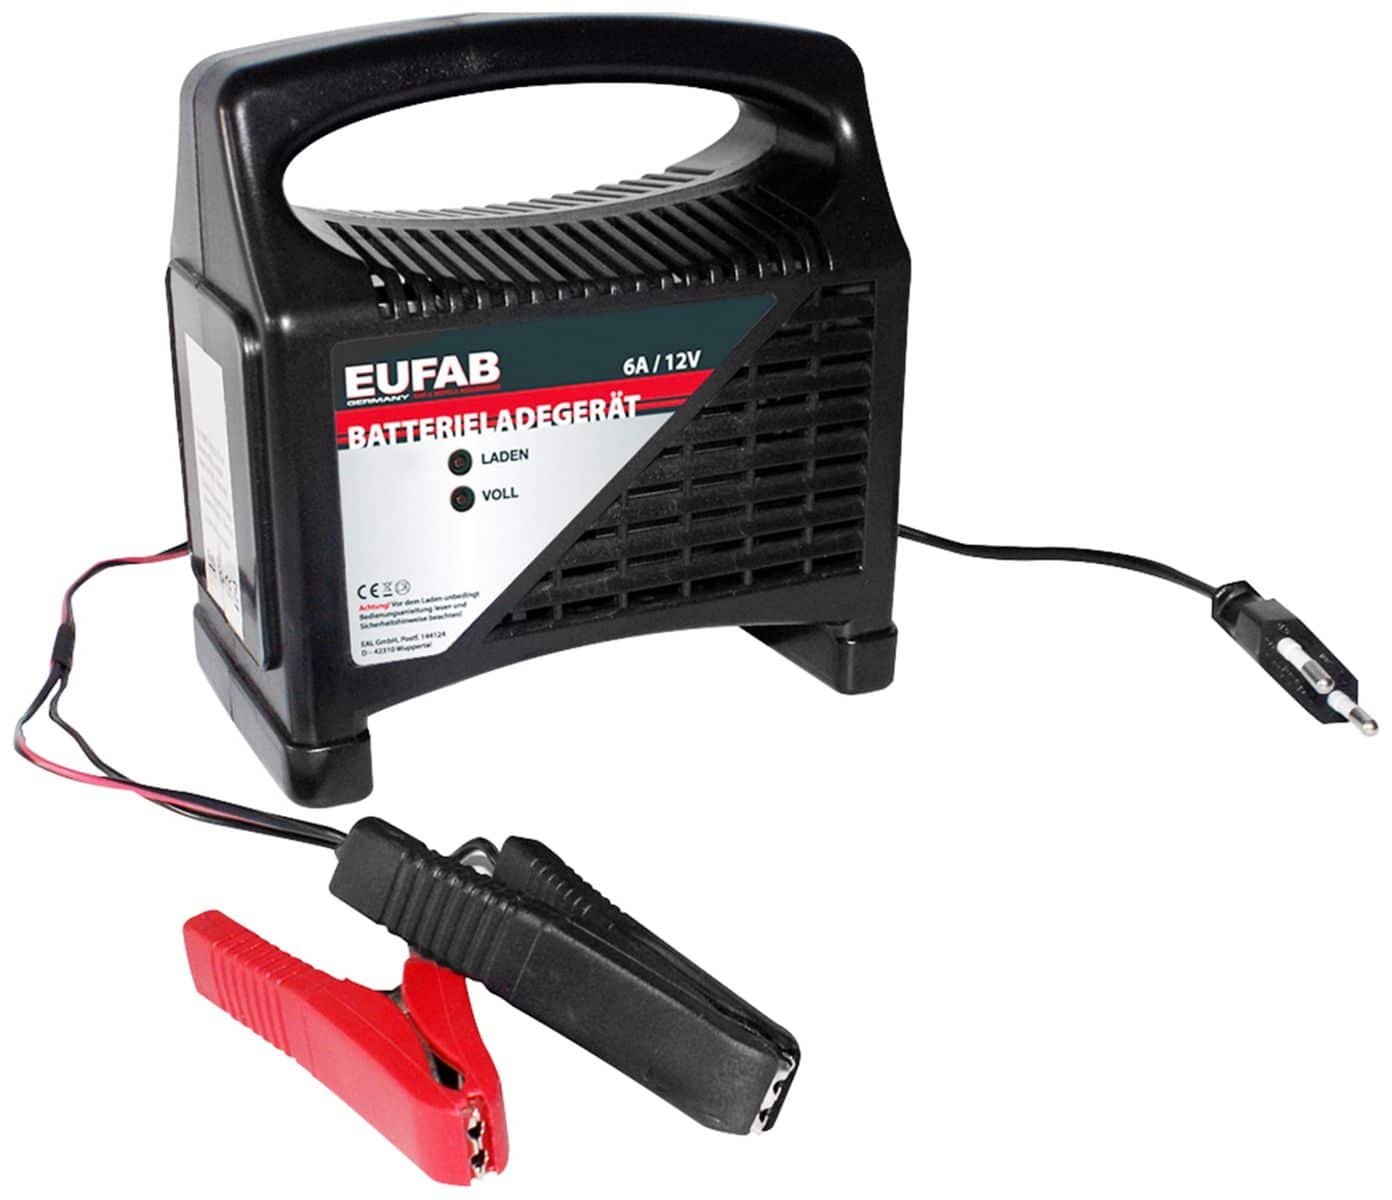 EUFAB Batterie-Ladegerät 16542, 12 V, 6 A von EUFAB